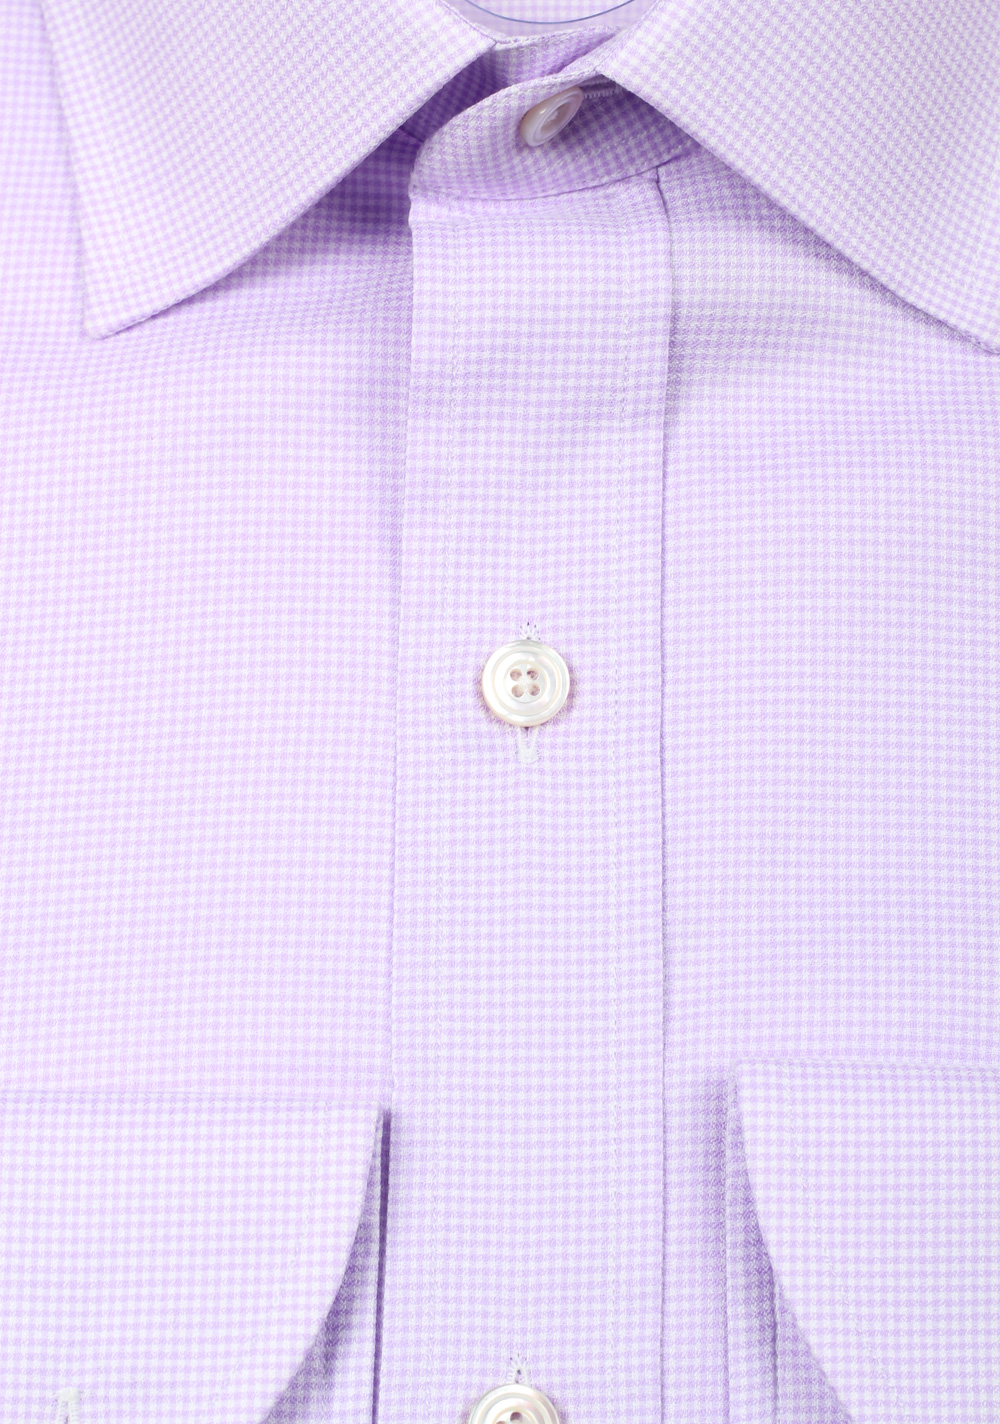 TOM FORD Patterned Lilac Dress Shirt Size 45 / 17,75 U.S. | Costume Limité